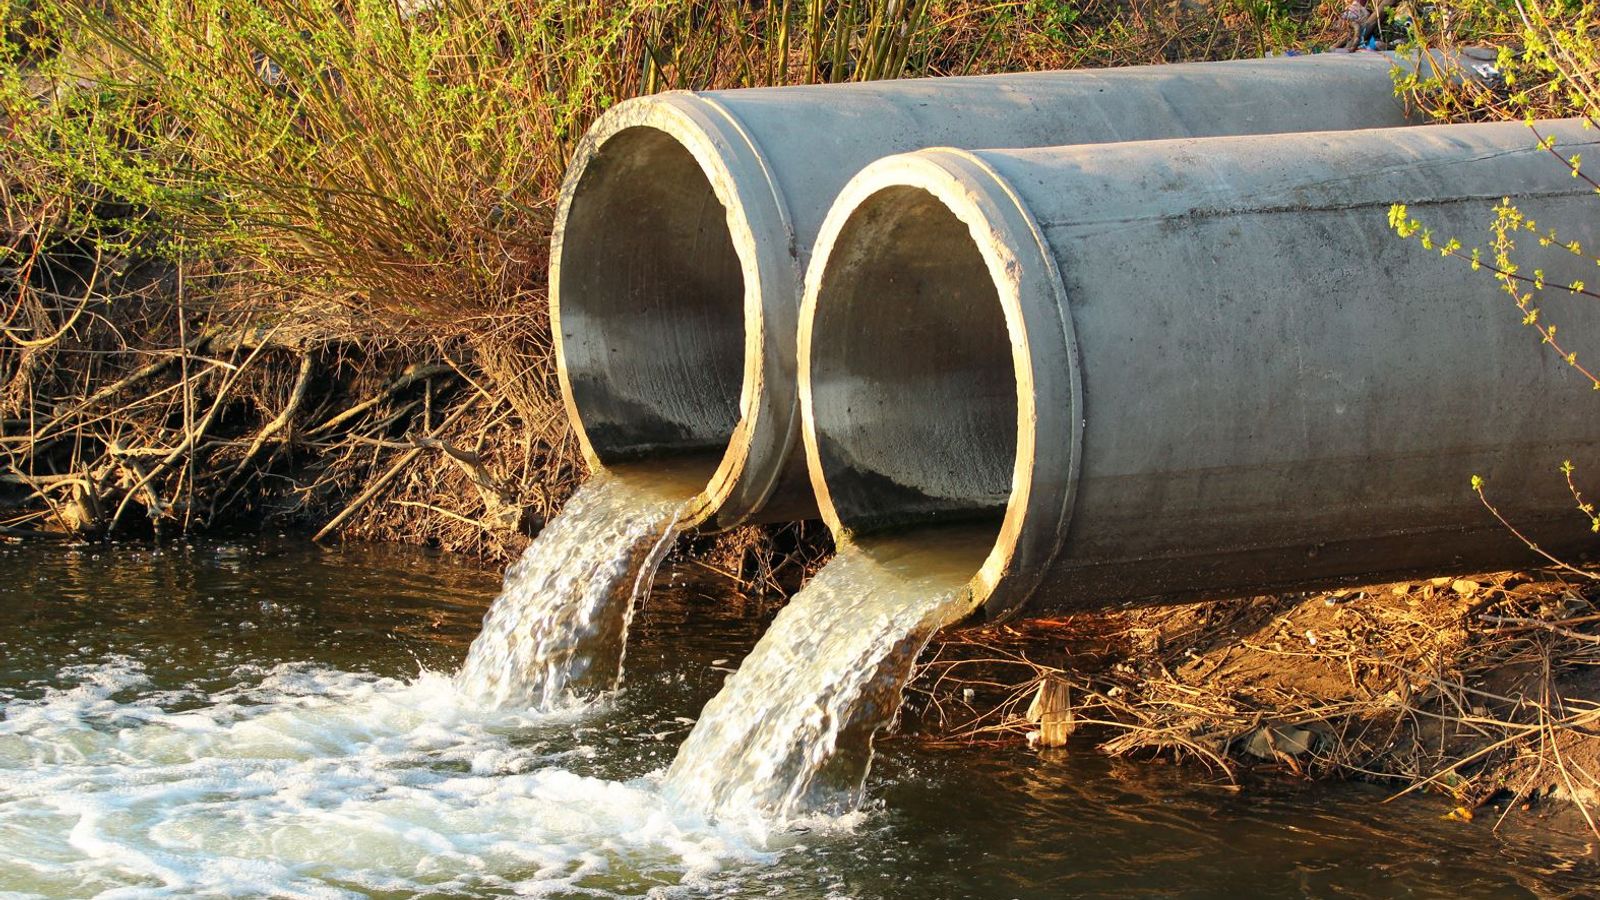 Water regulator names six providers 'falling short' on key obligations including sewage